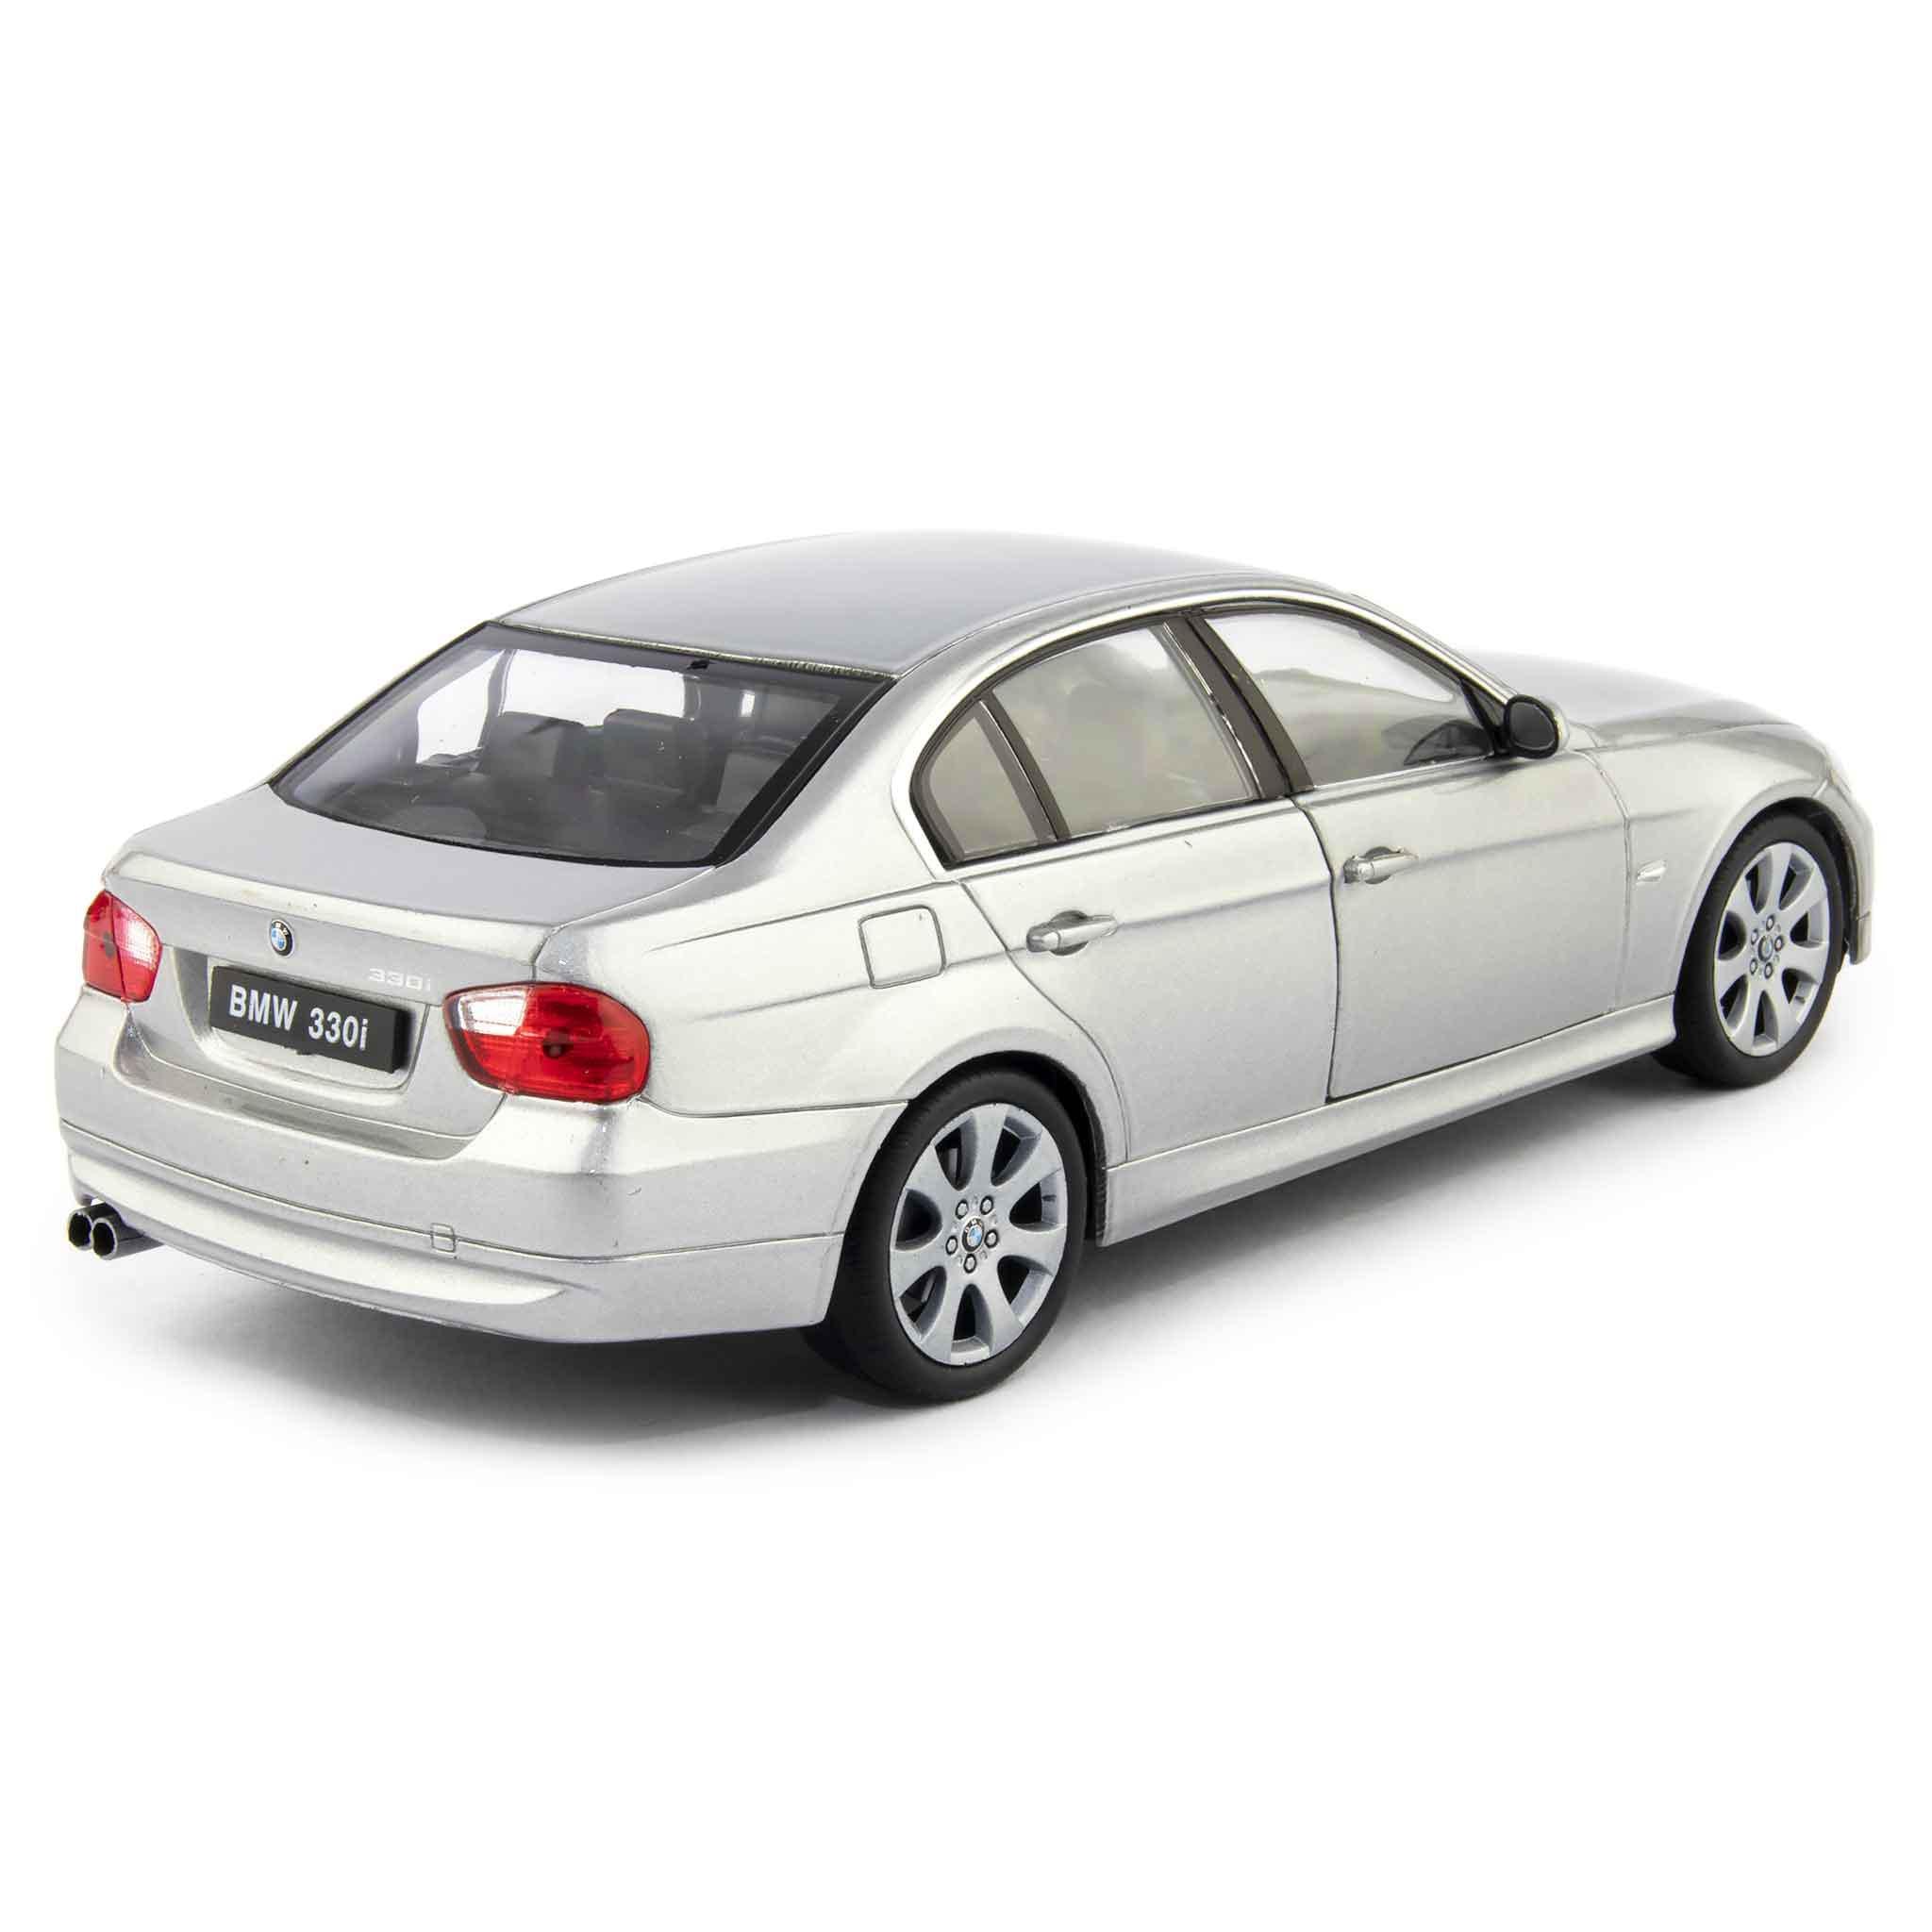 BMW 330i Diecast Model Car grey - 1:24 Scale-Welly-Diecast Model Centre